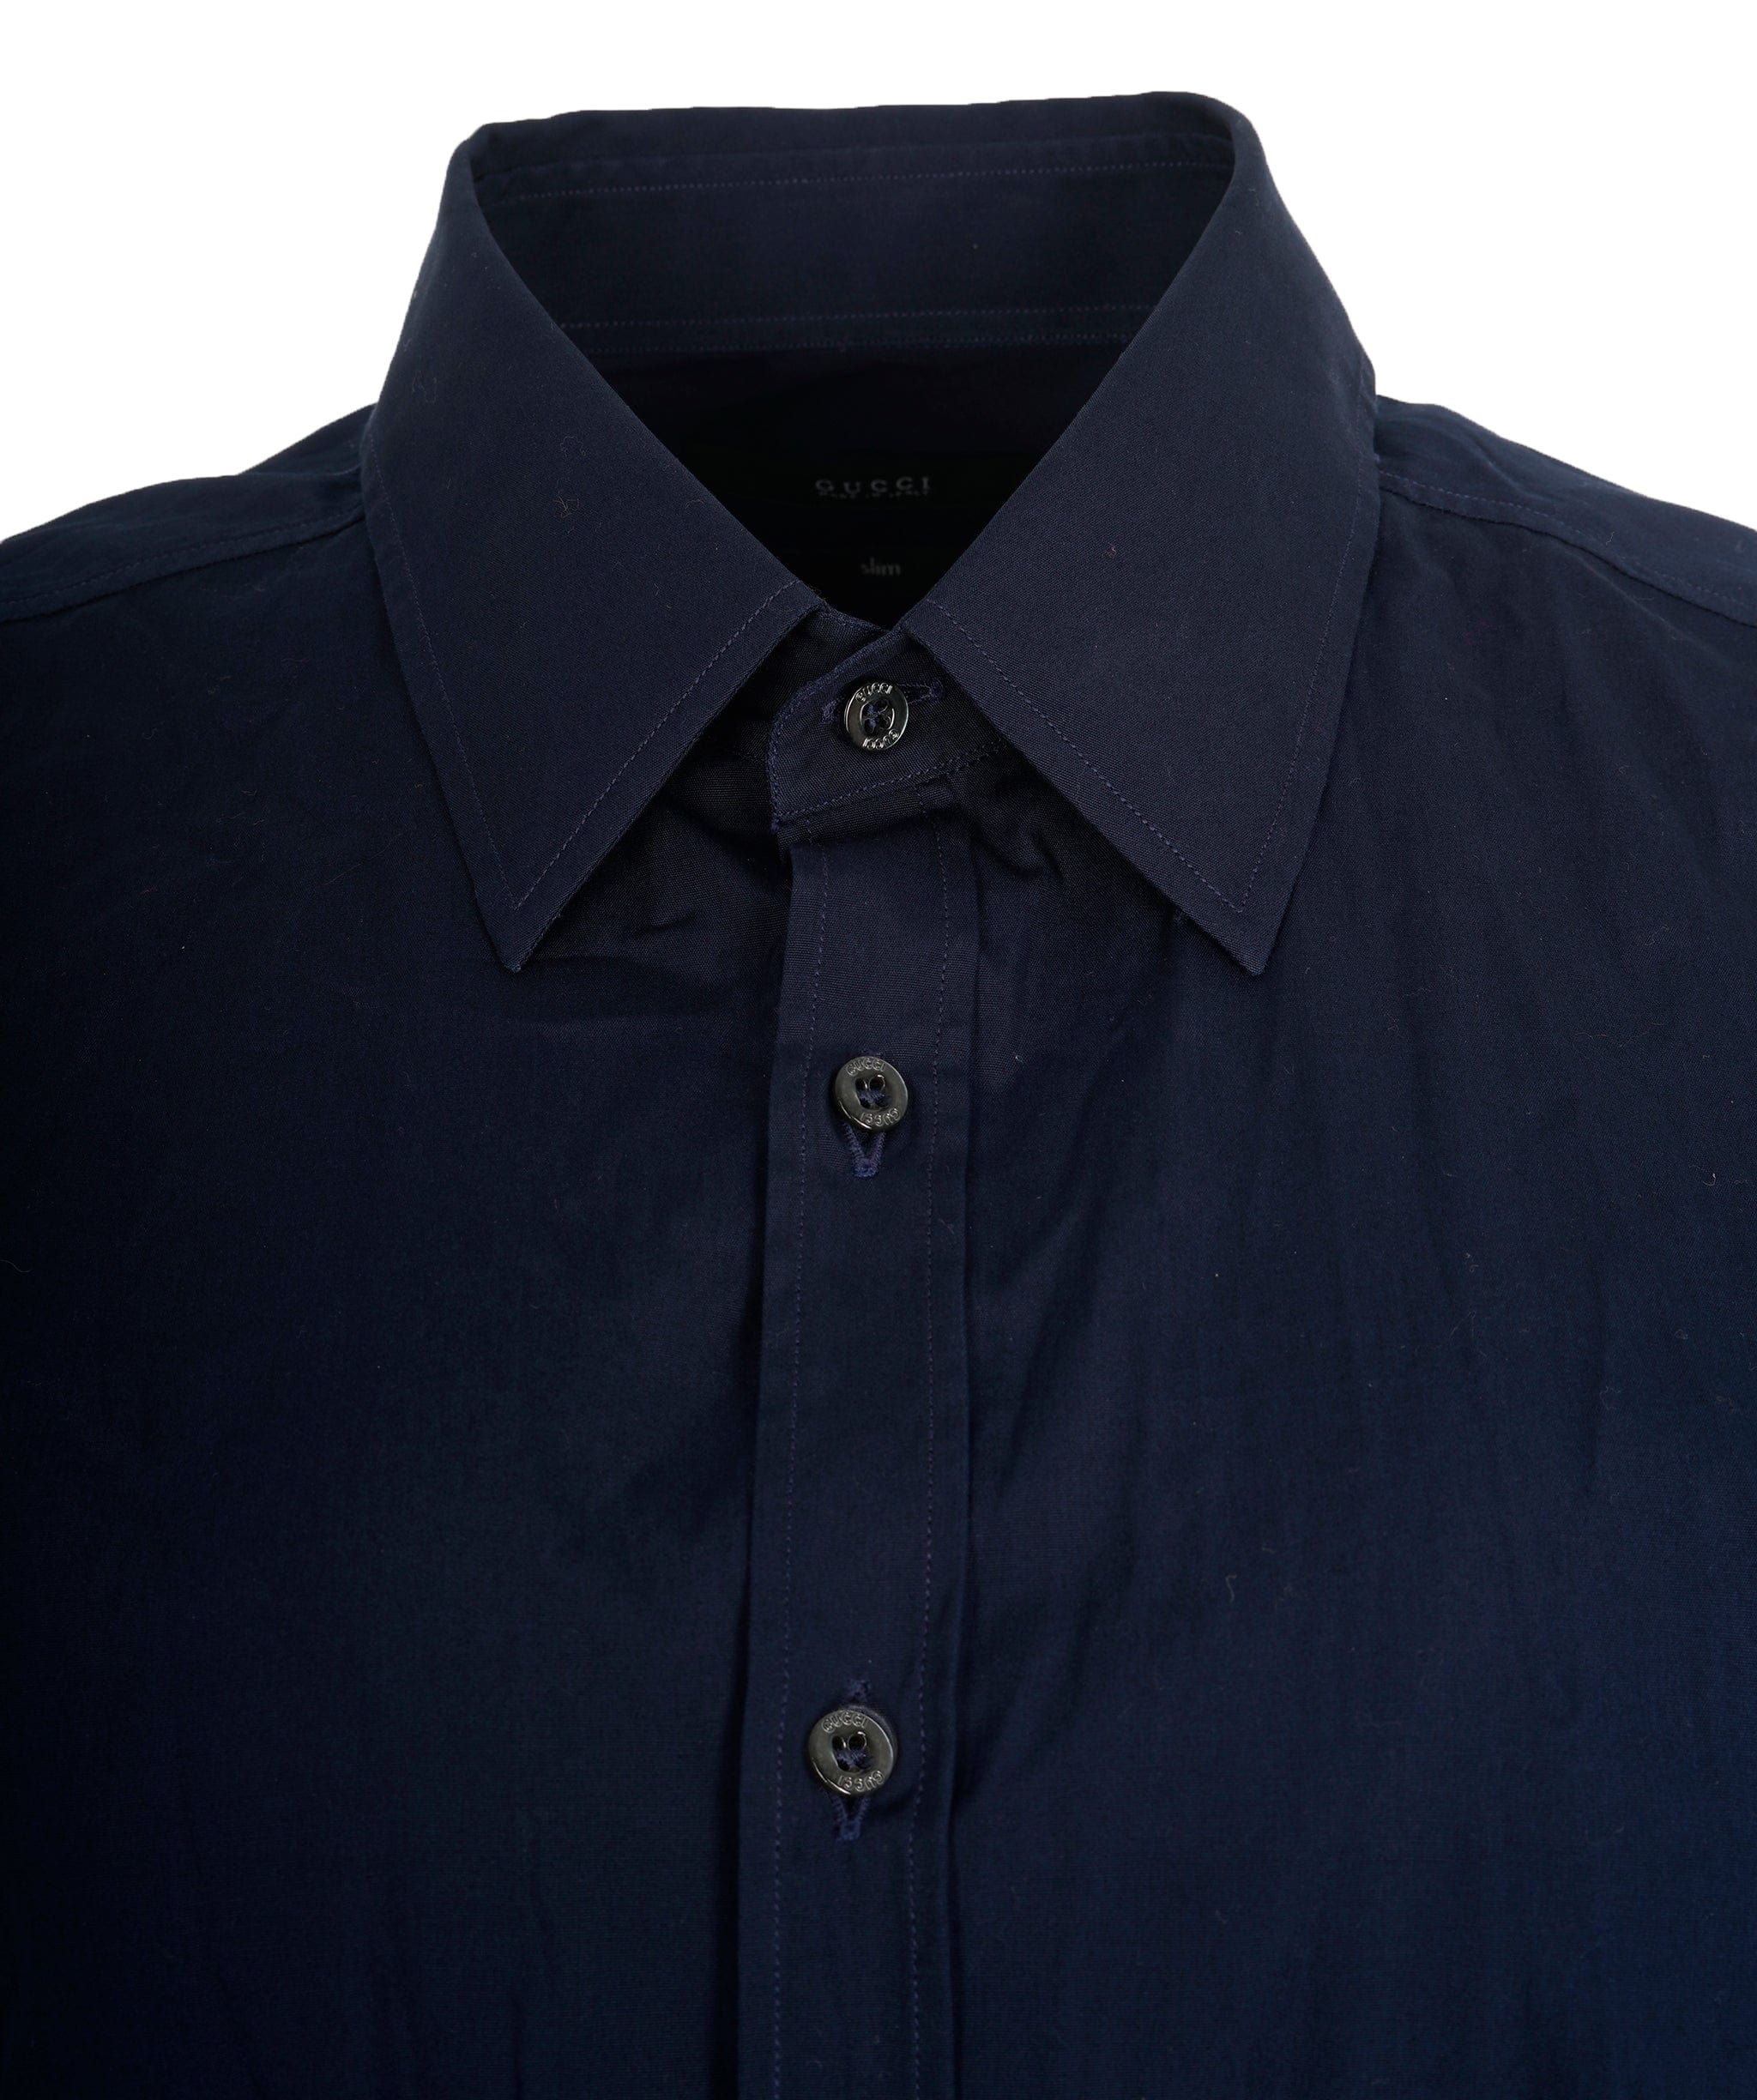 Gucci Gucci Navy Blue Shirt size XL AGC1652